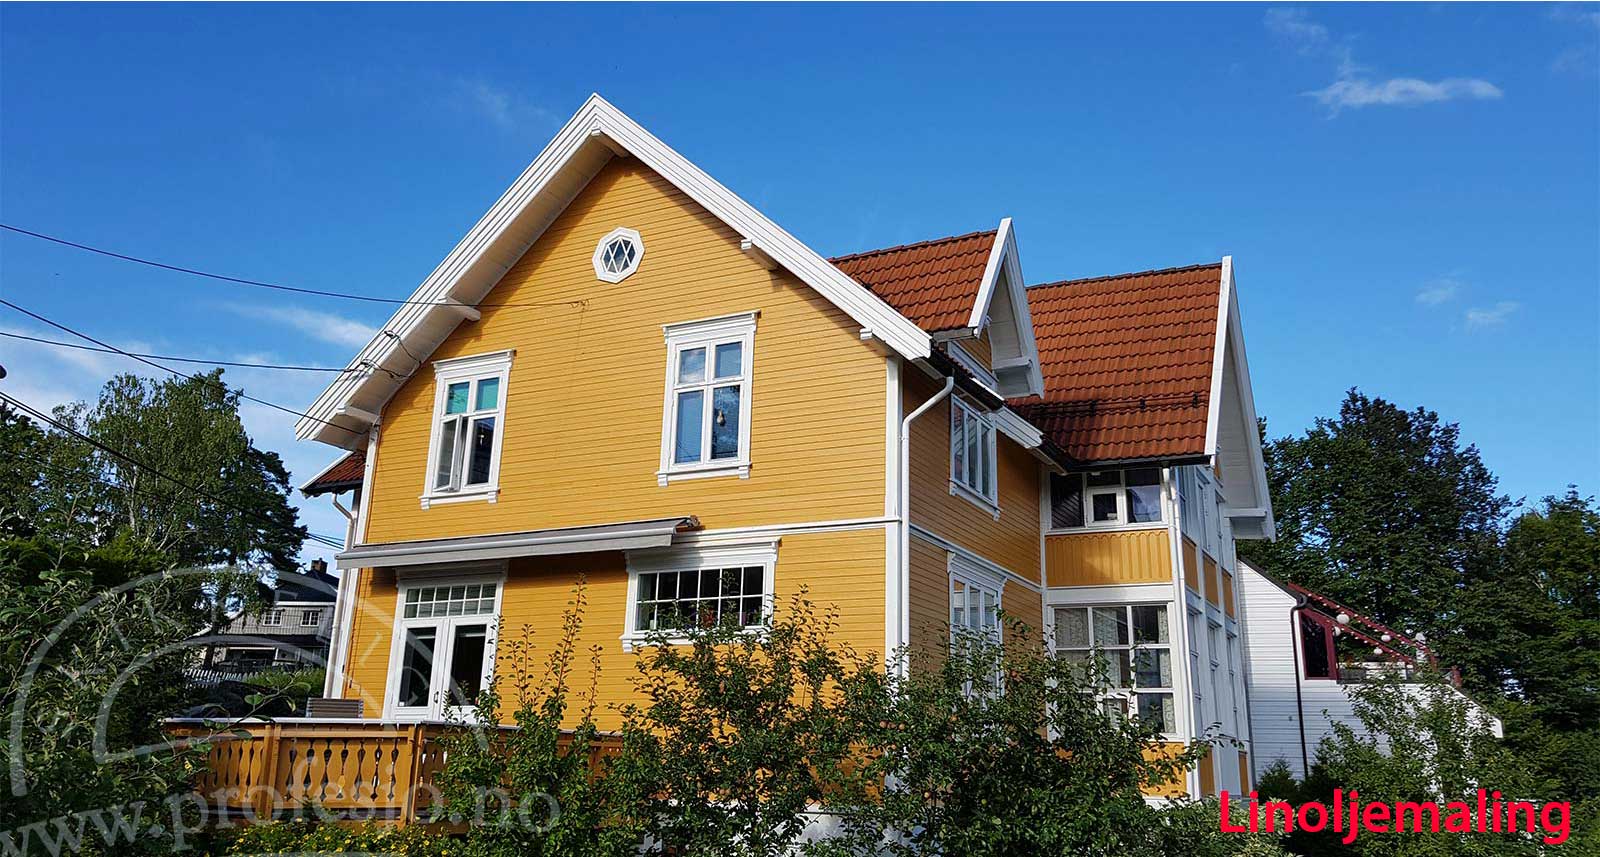 linoljemaling hus etter maling - hus i fargene gul - utvendig maling